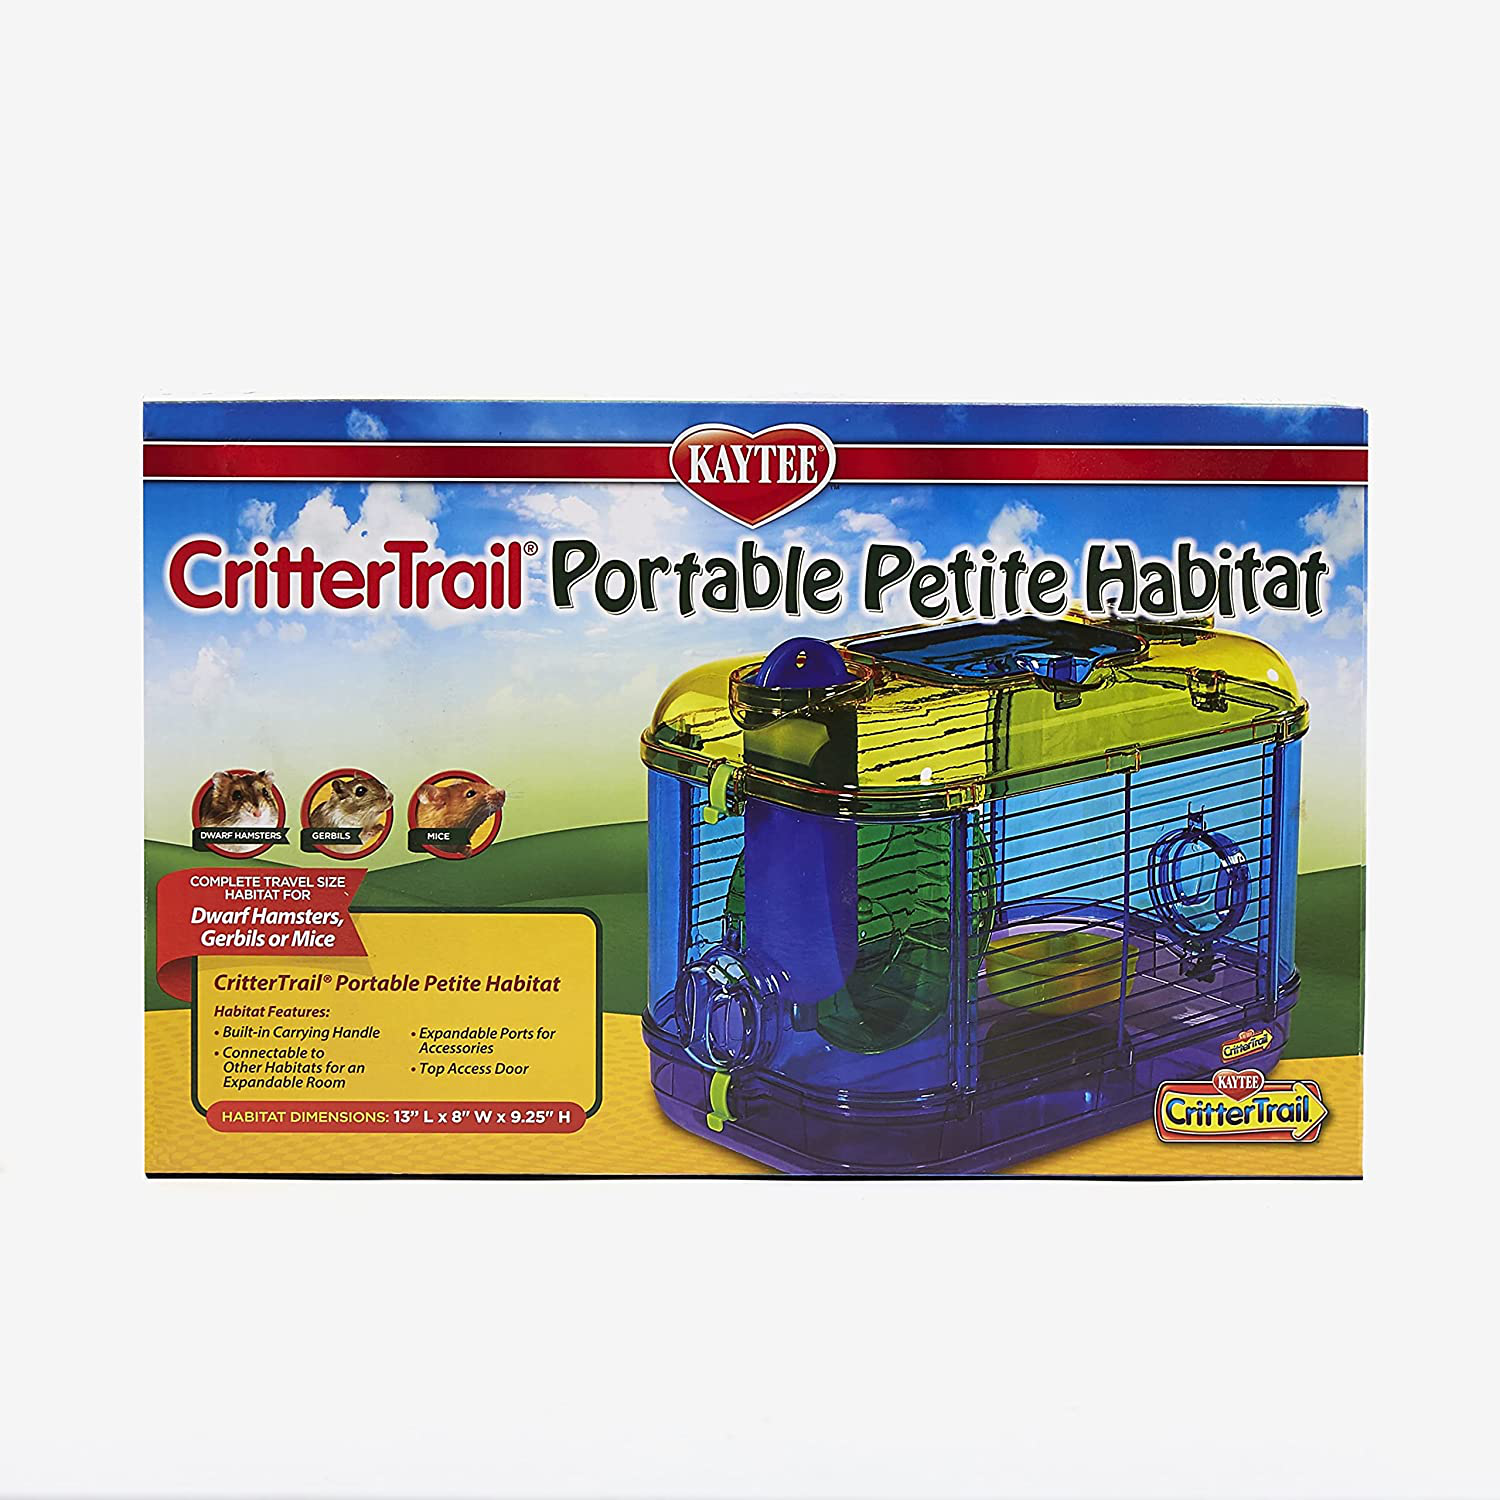 Kaytee Crittertrail Portable Petite Habitat